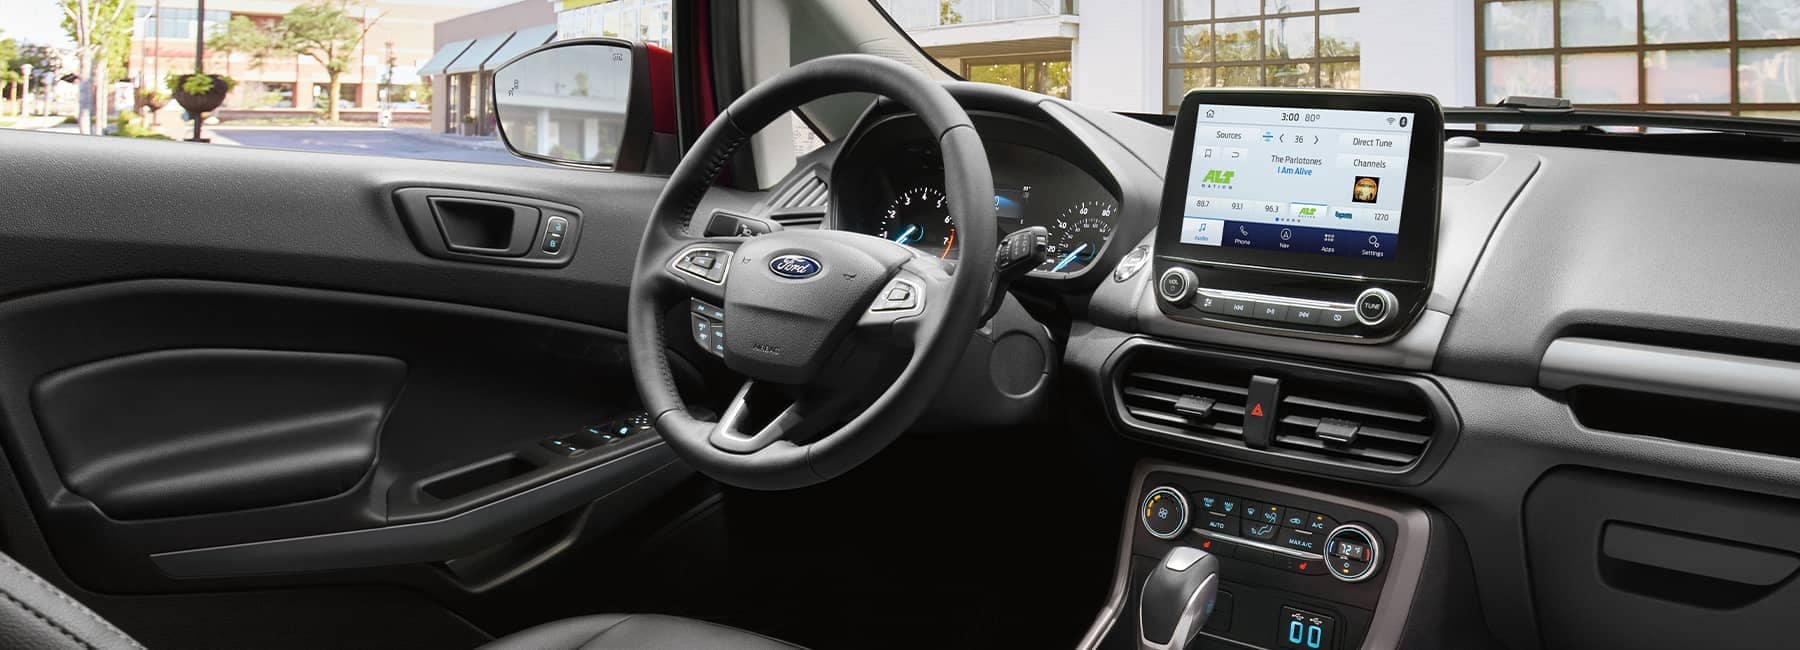 Ford EcoSport interior dashboard